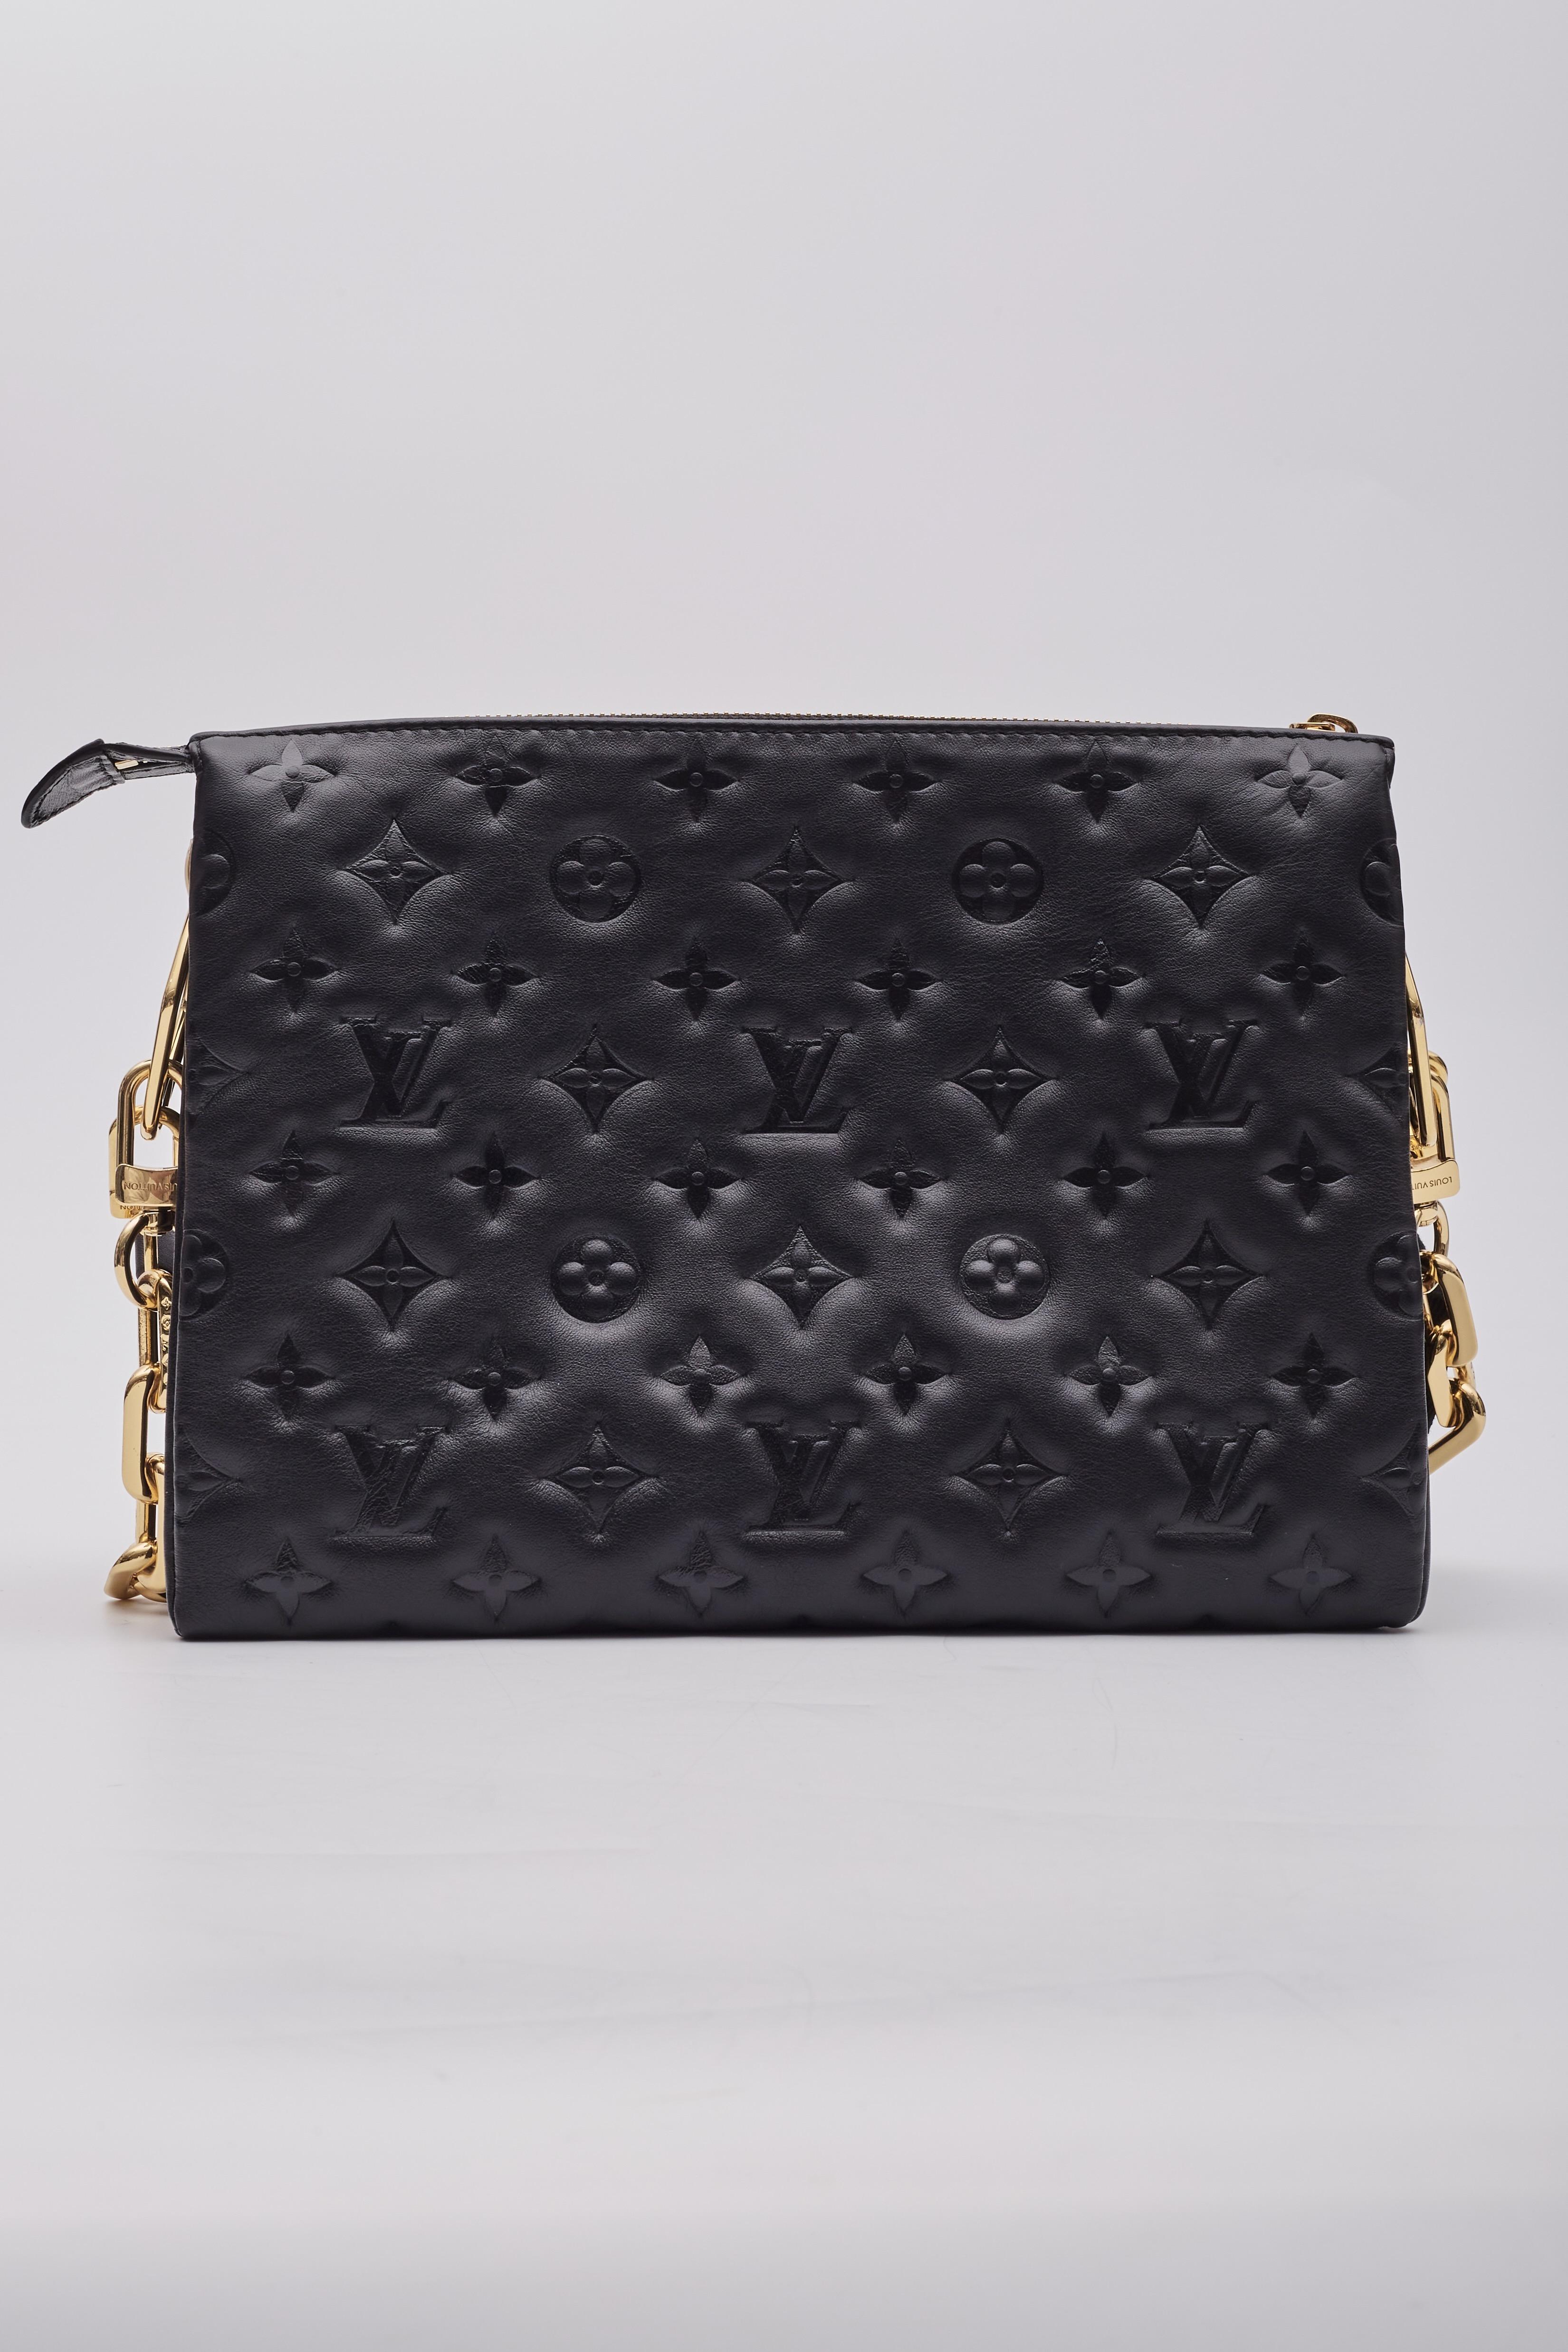 Women's Louis Vuitton Black Lambskin Embossed Monogram Coussin Pm Bag For Sale